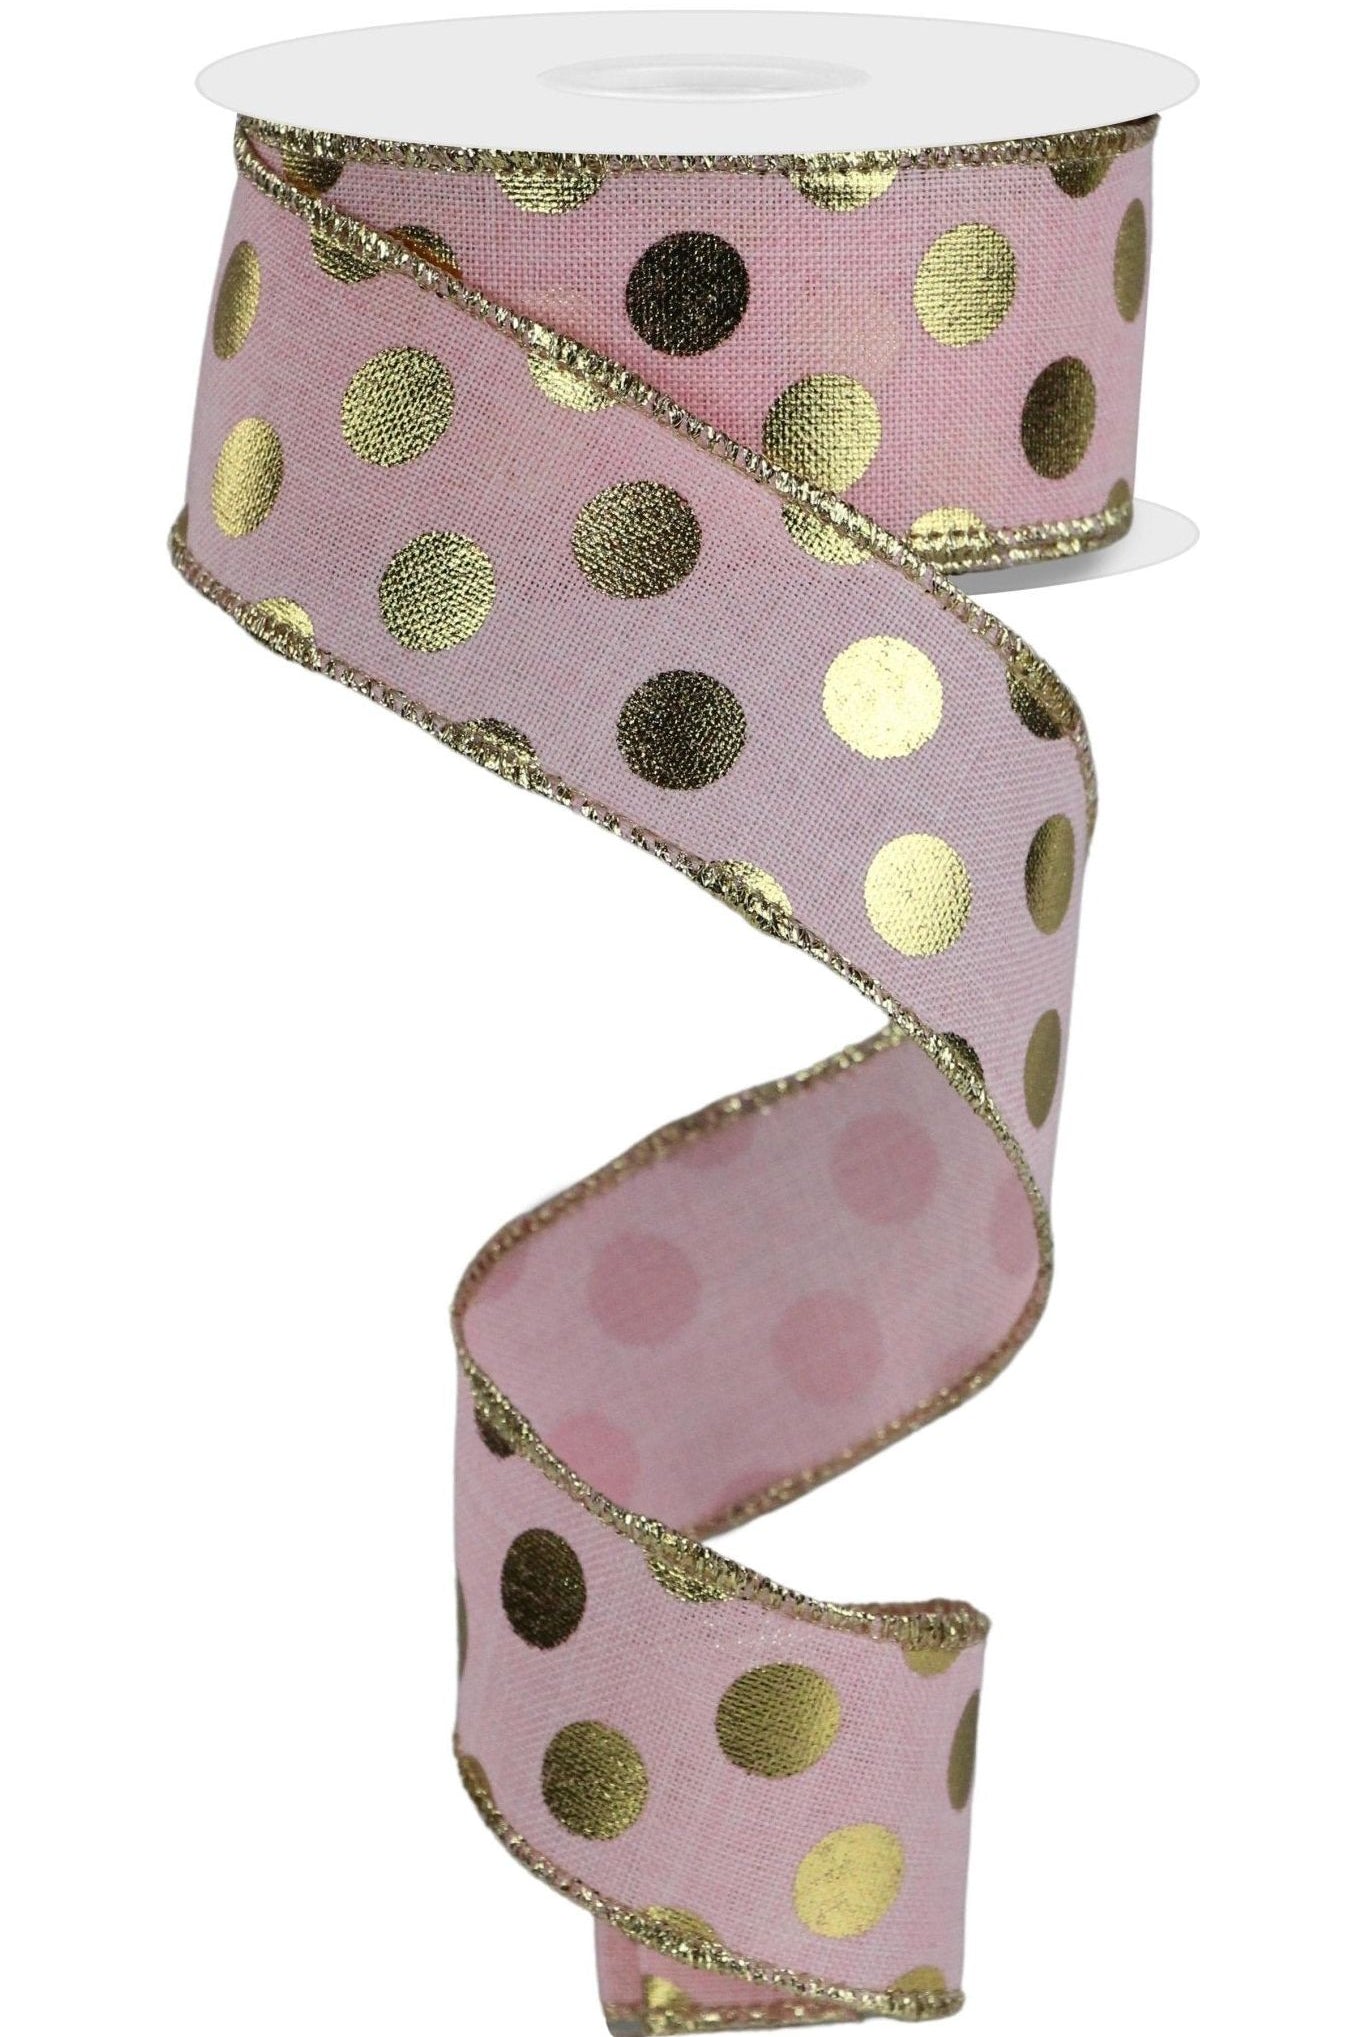 Shop For 1.5" Metallic Polka Dots Ribbon: Pale Pink (10 Yards) RGE1661T7